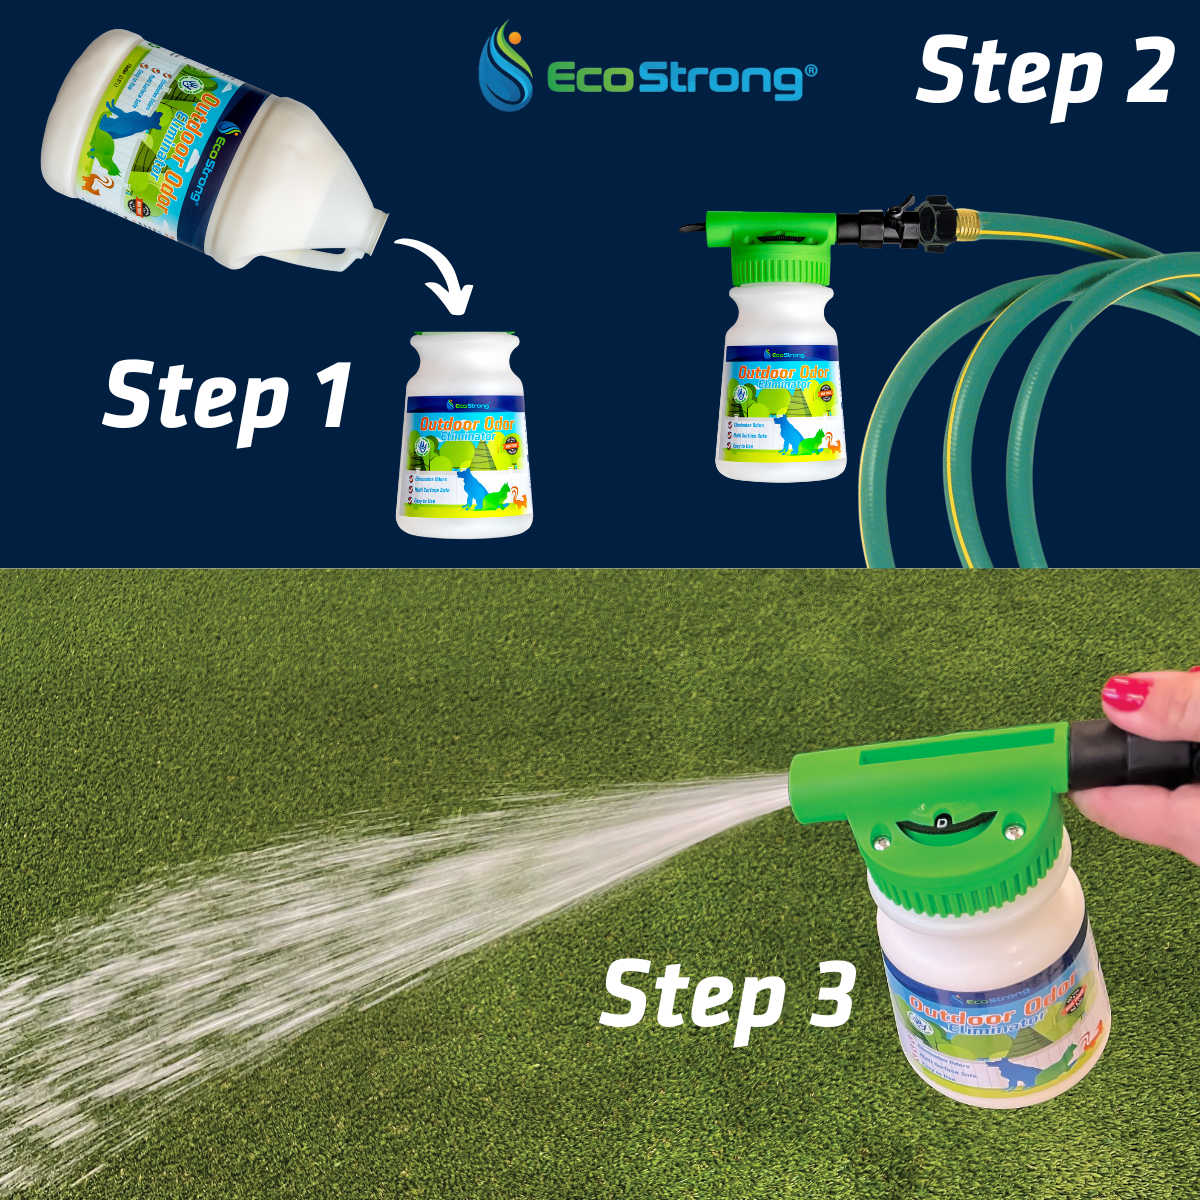 Eco Strong Outdoor Odor Eliminator 1 gallon jug and sprayer #size_1-gallon-jug-and-multi-use-sprayer